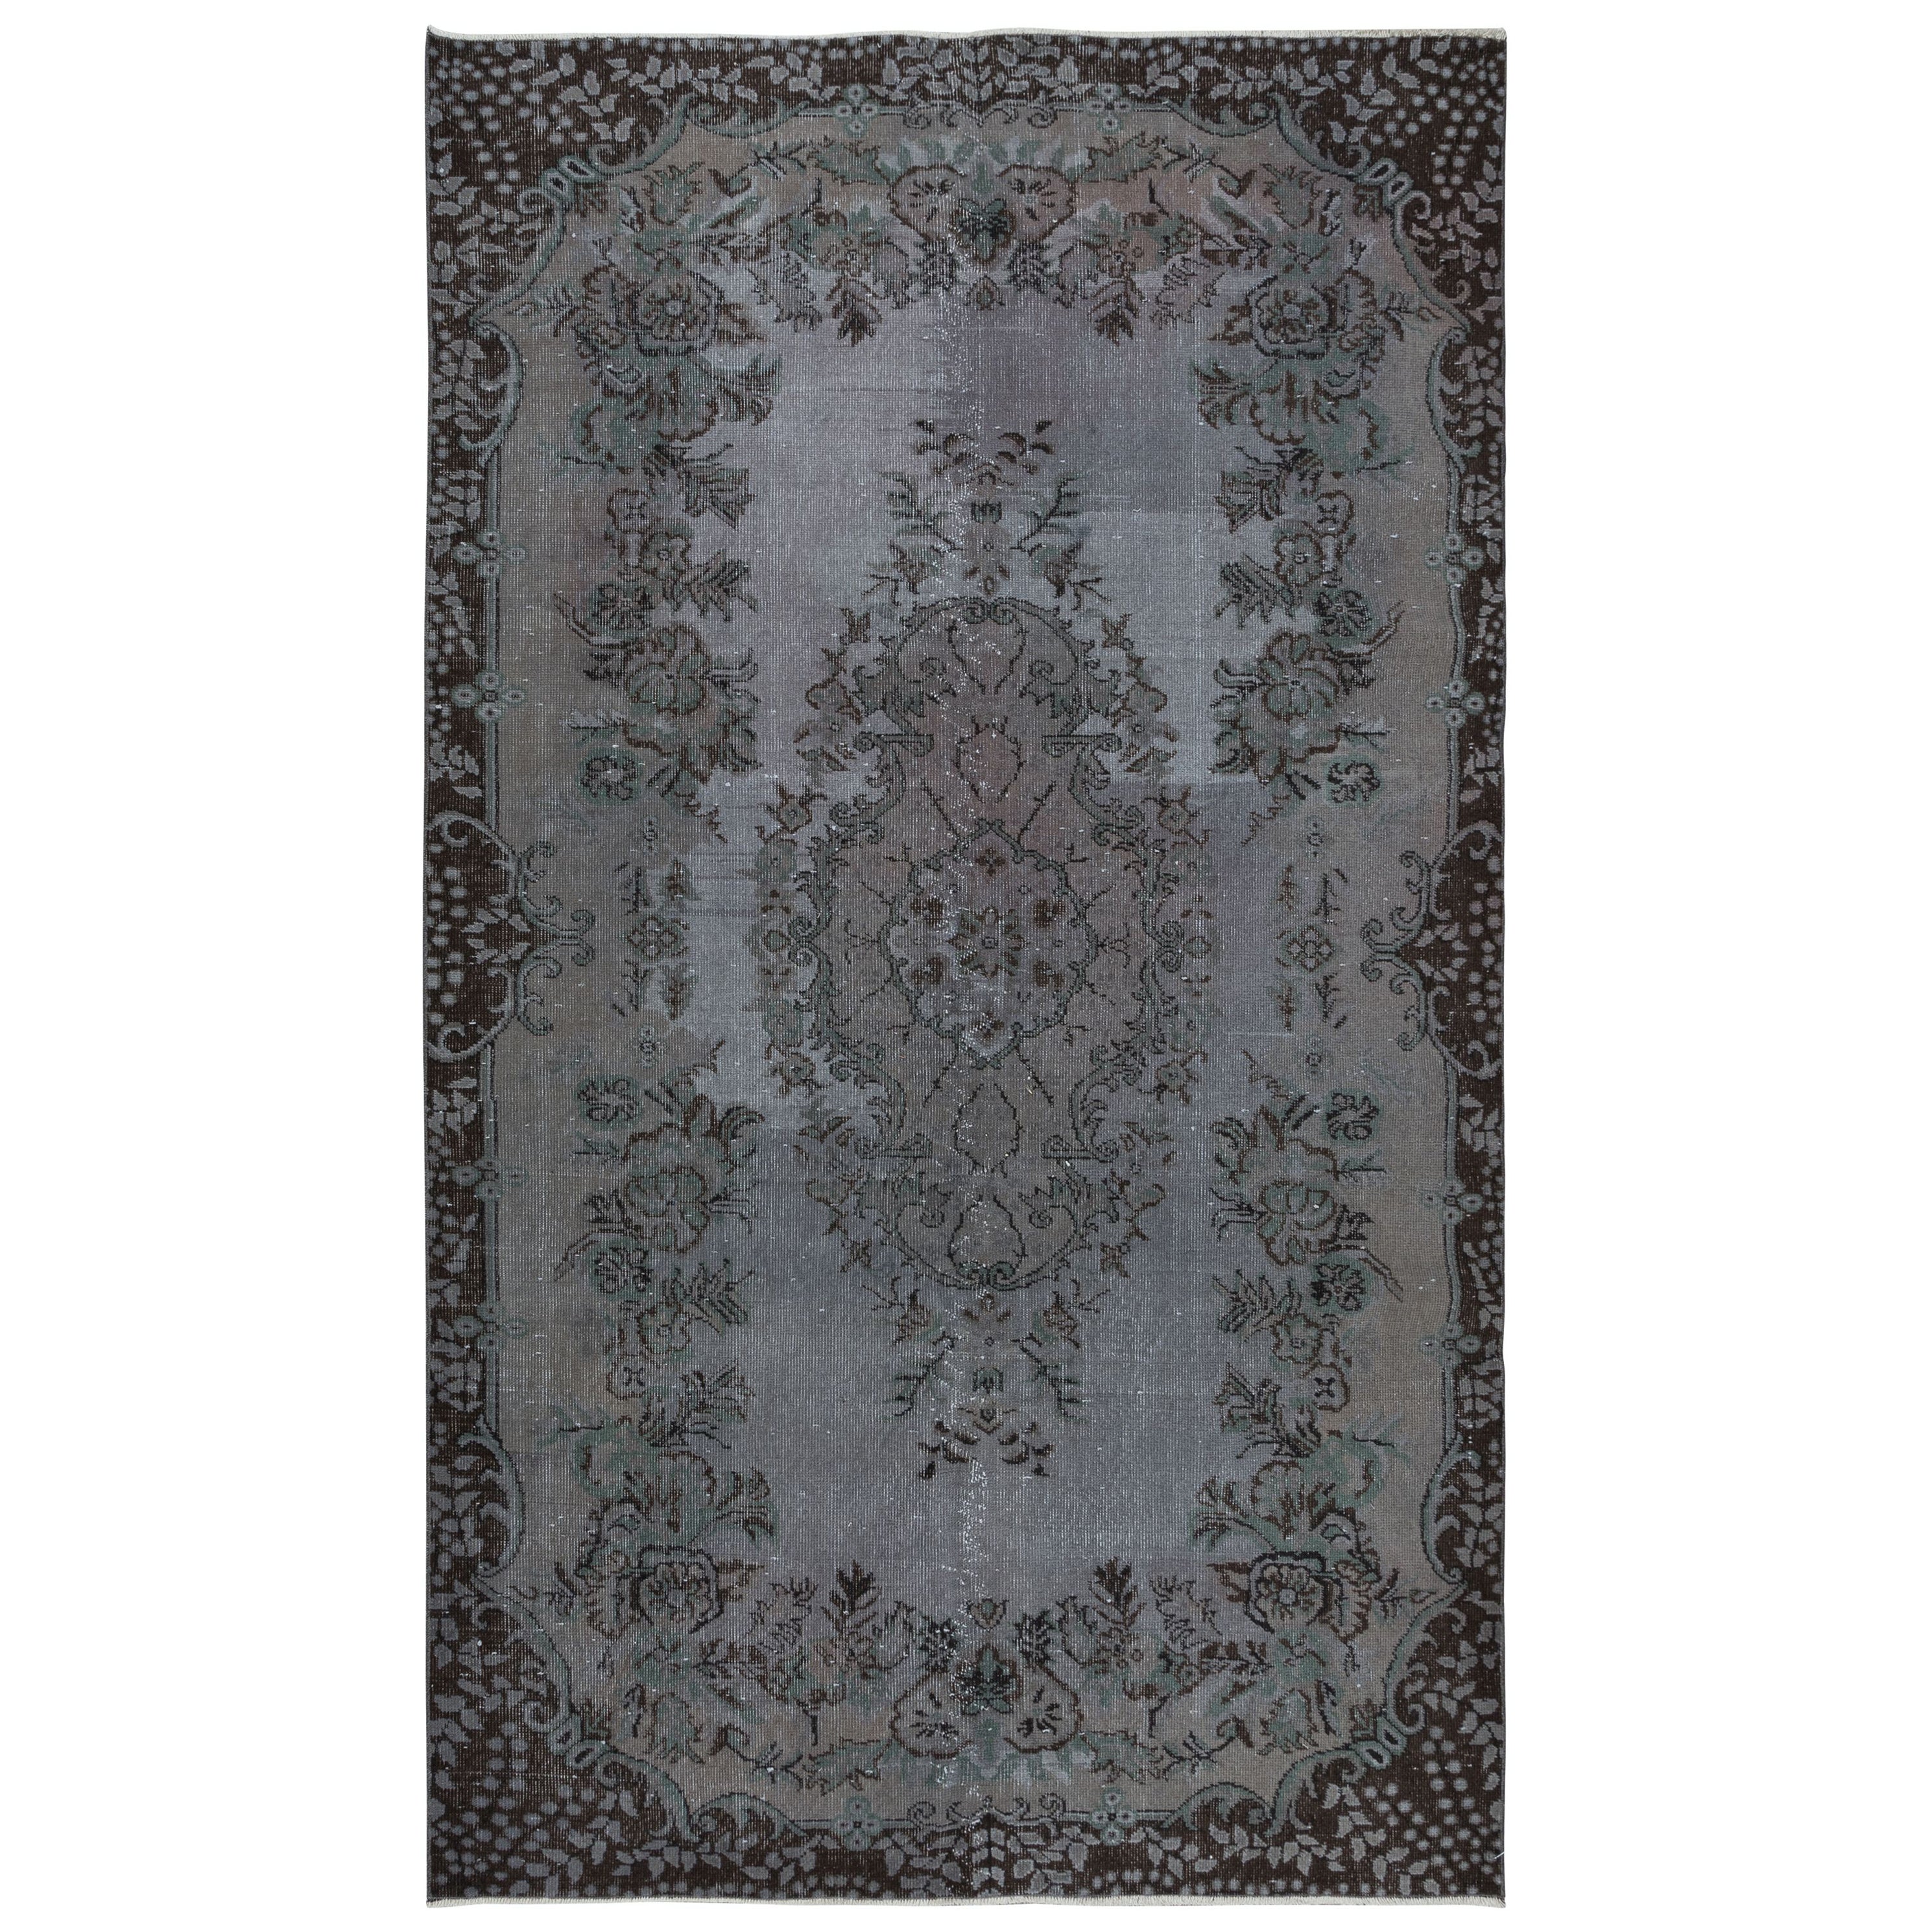 5.6x9 Ft Hand Knots Rug with Floral Medallion, Gray Modern Turkish Carpet (tapis turc moderne)